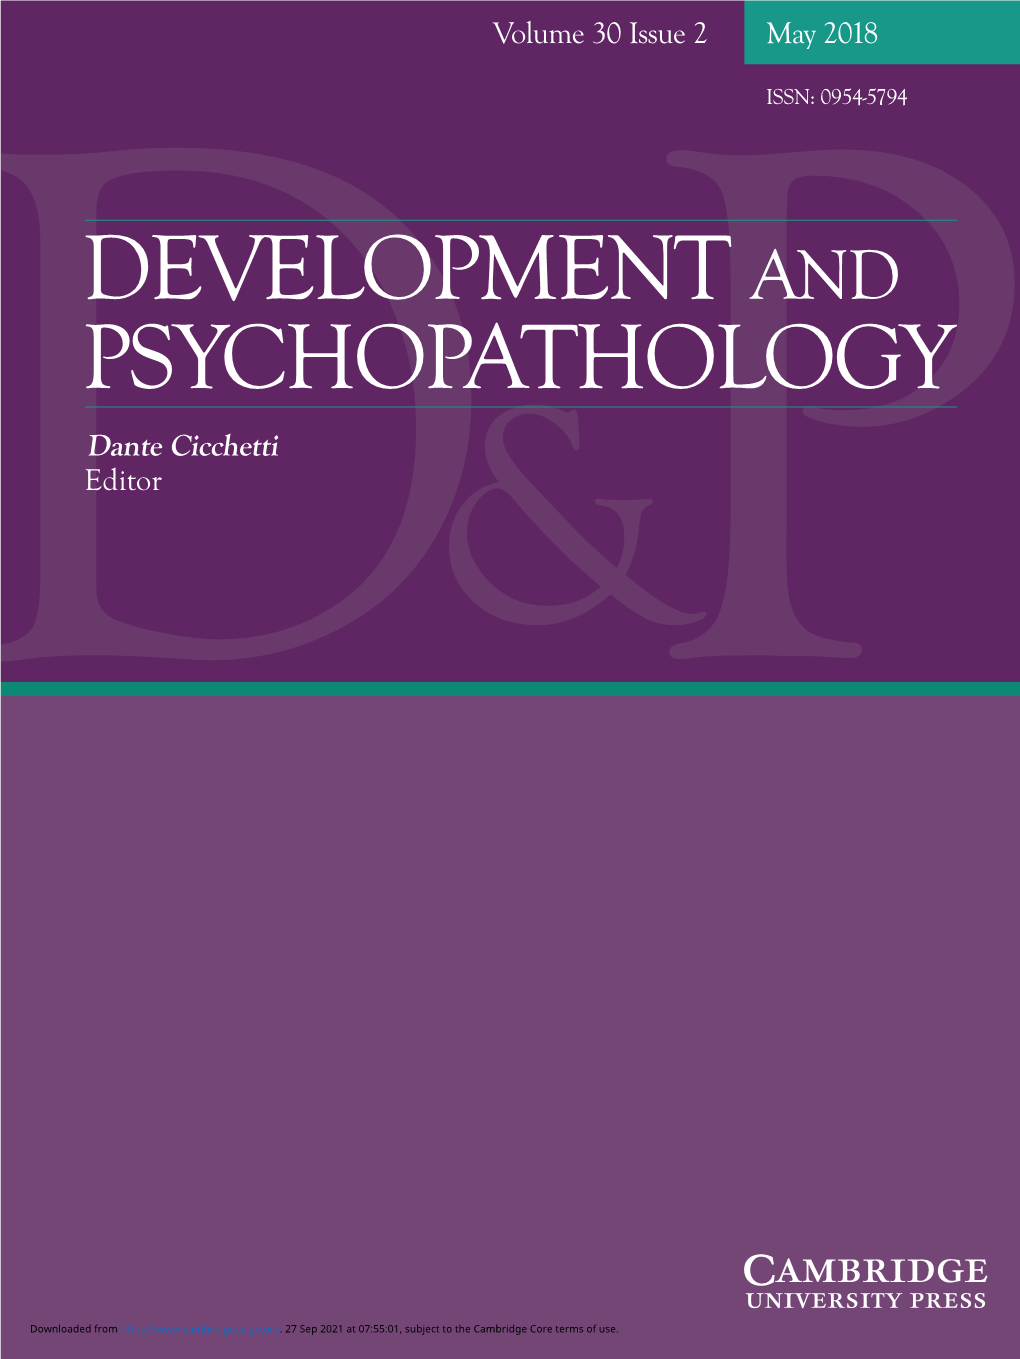 DEVELOPMENT and PSYCHOPATHOLOGY Volume 30 Issue 2 May 2018